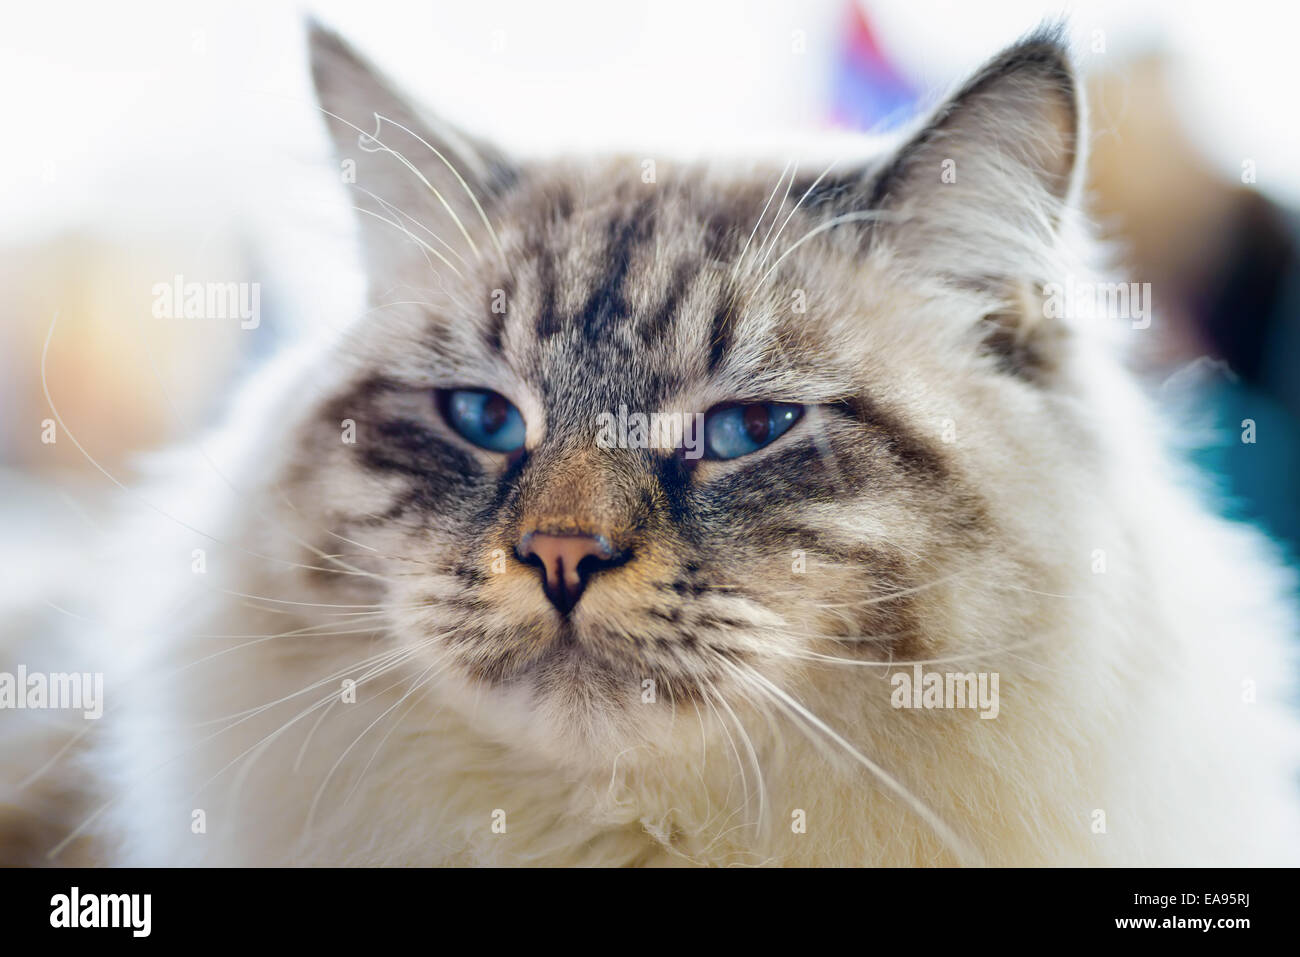 Animals: close-up portrait of blue-eyed Ragamuffin cat, blurred background Stock Photo